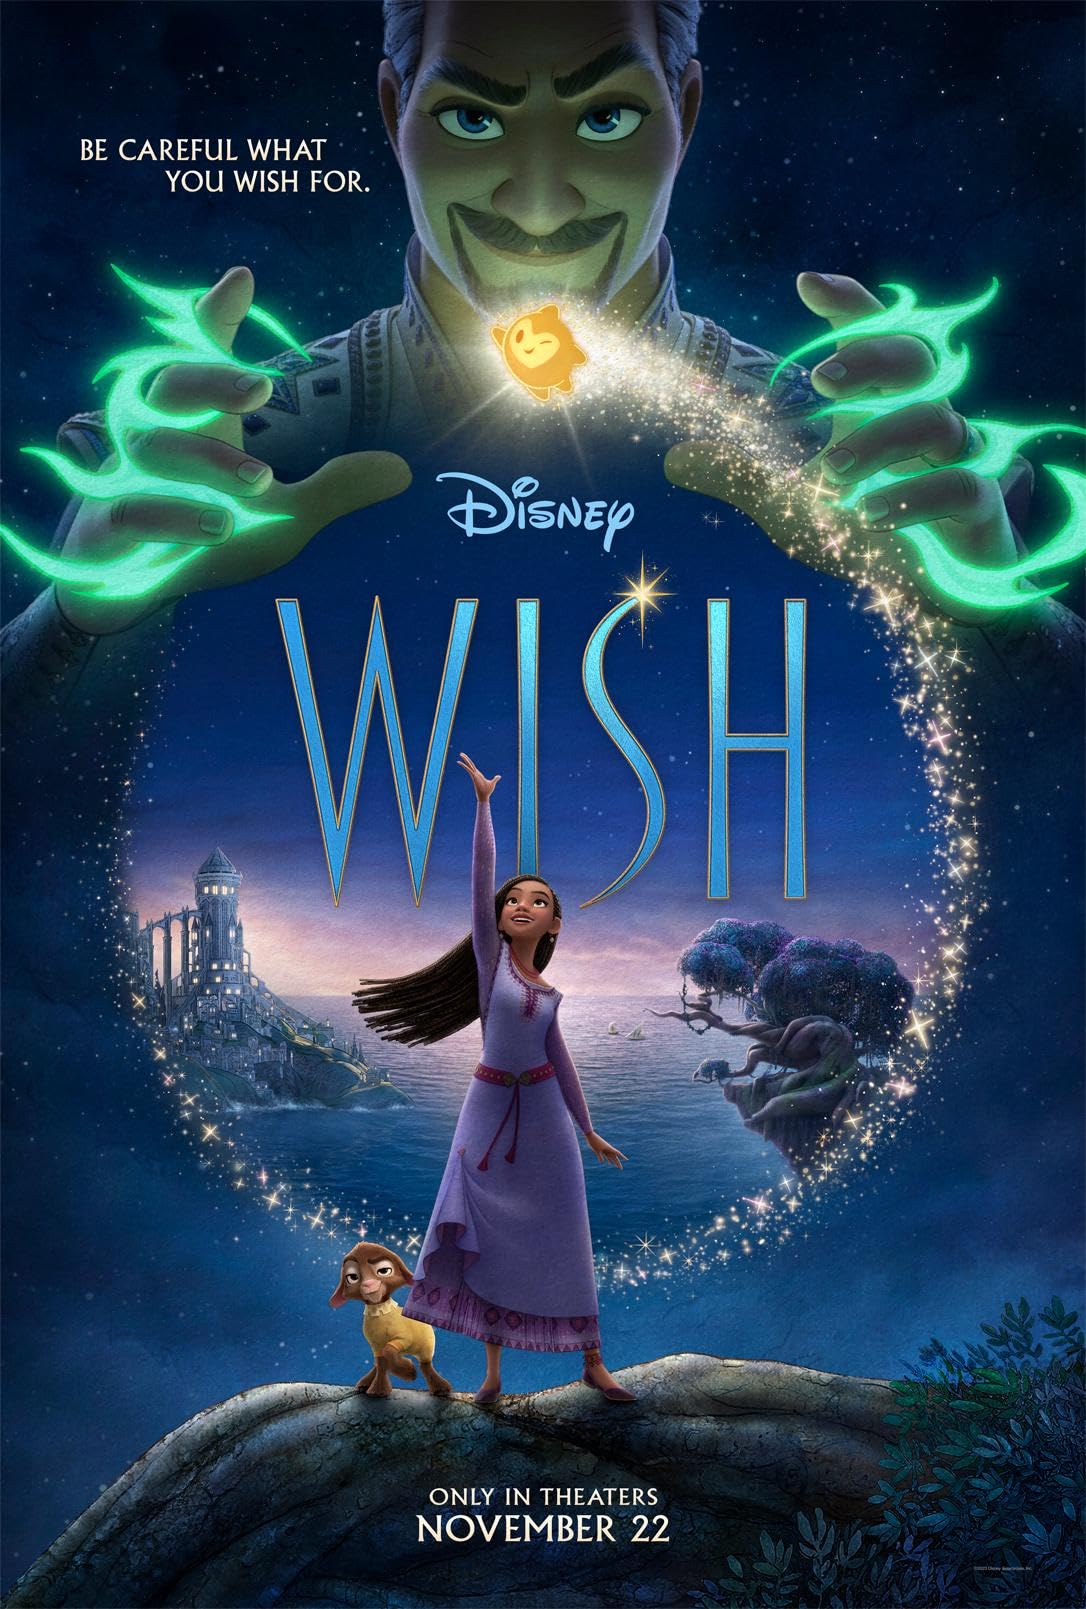 Disney's Wish movie poster